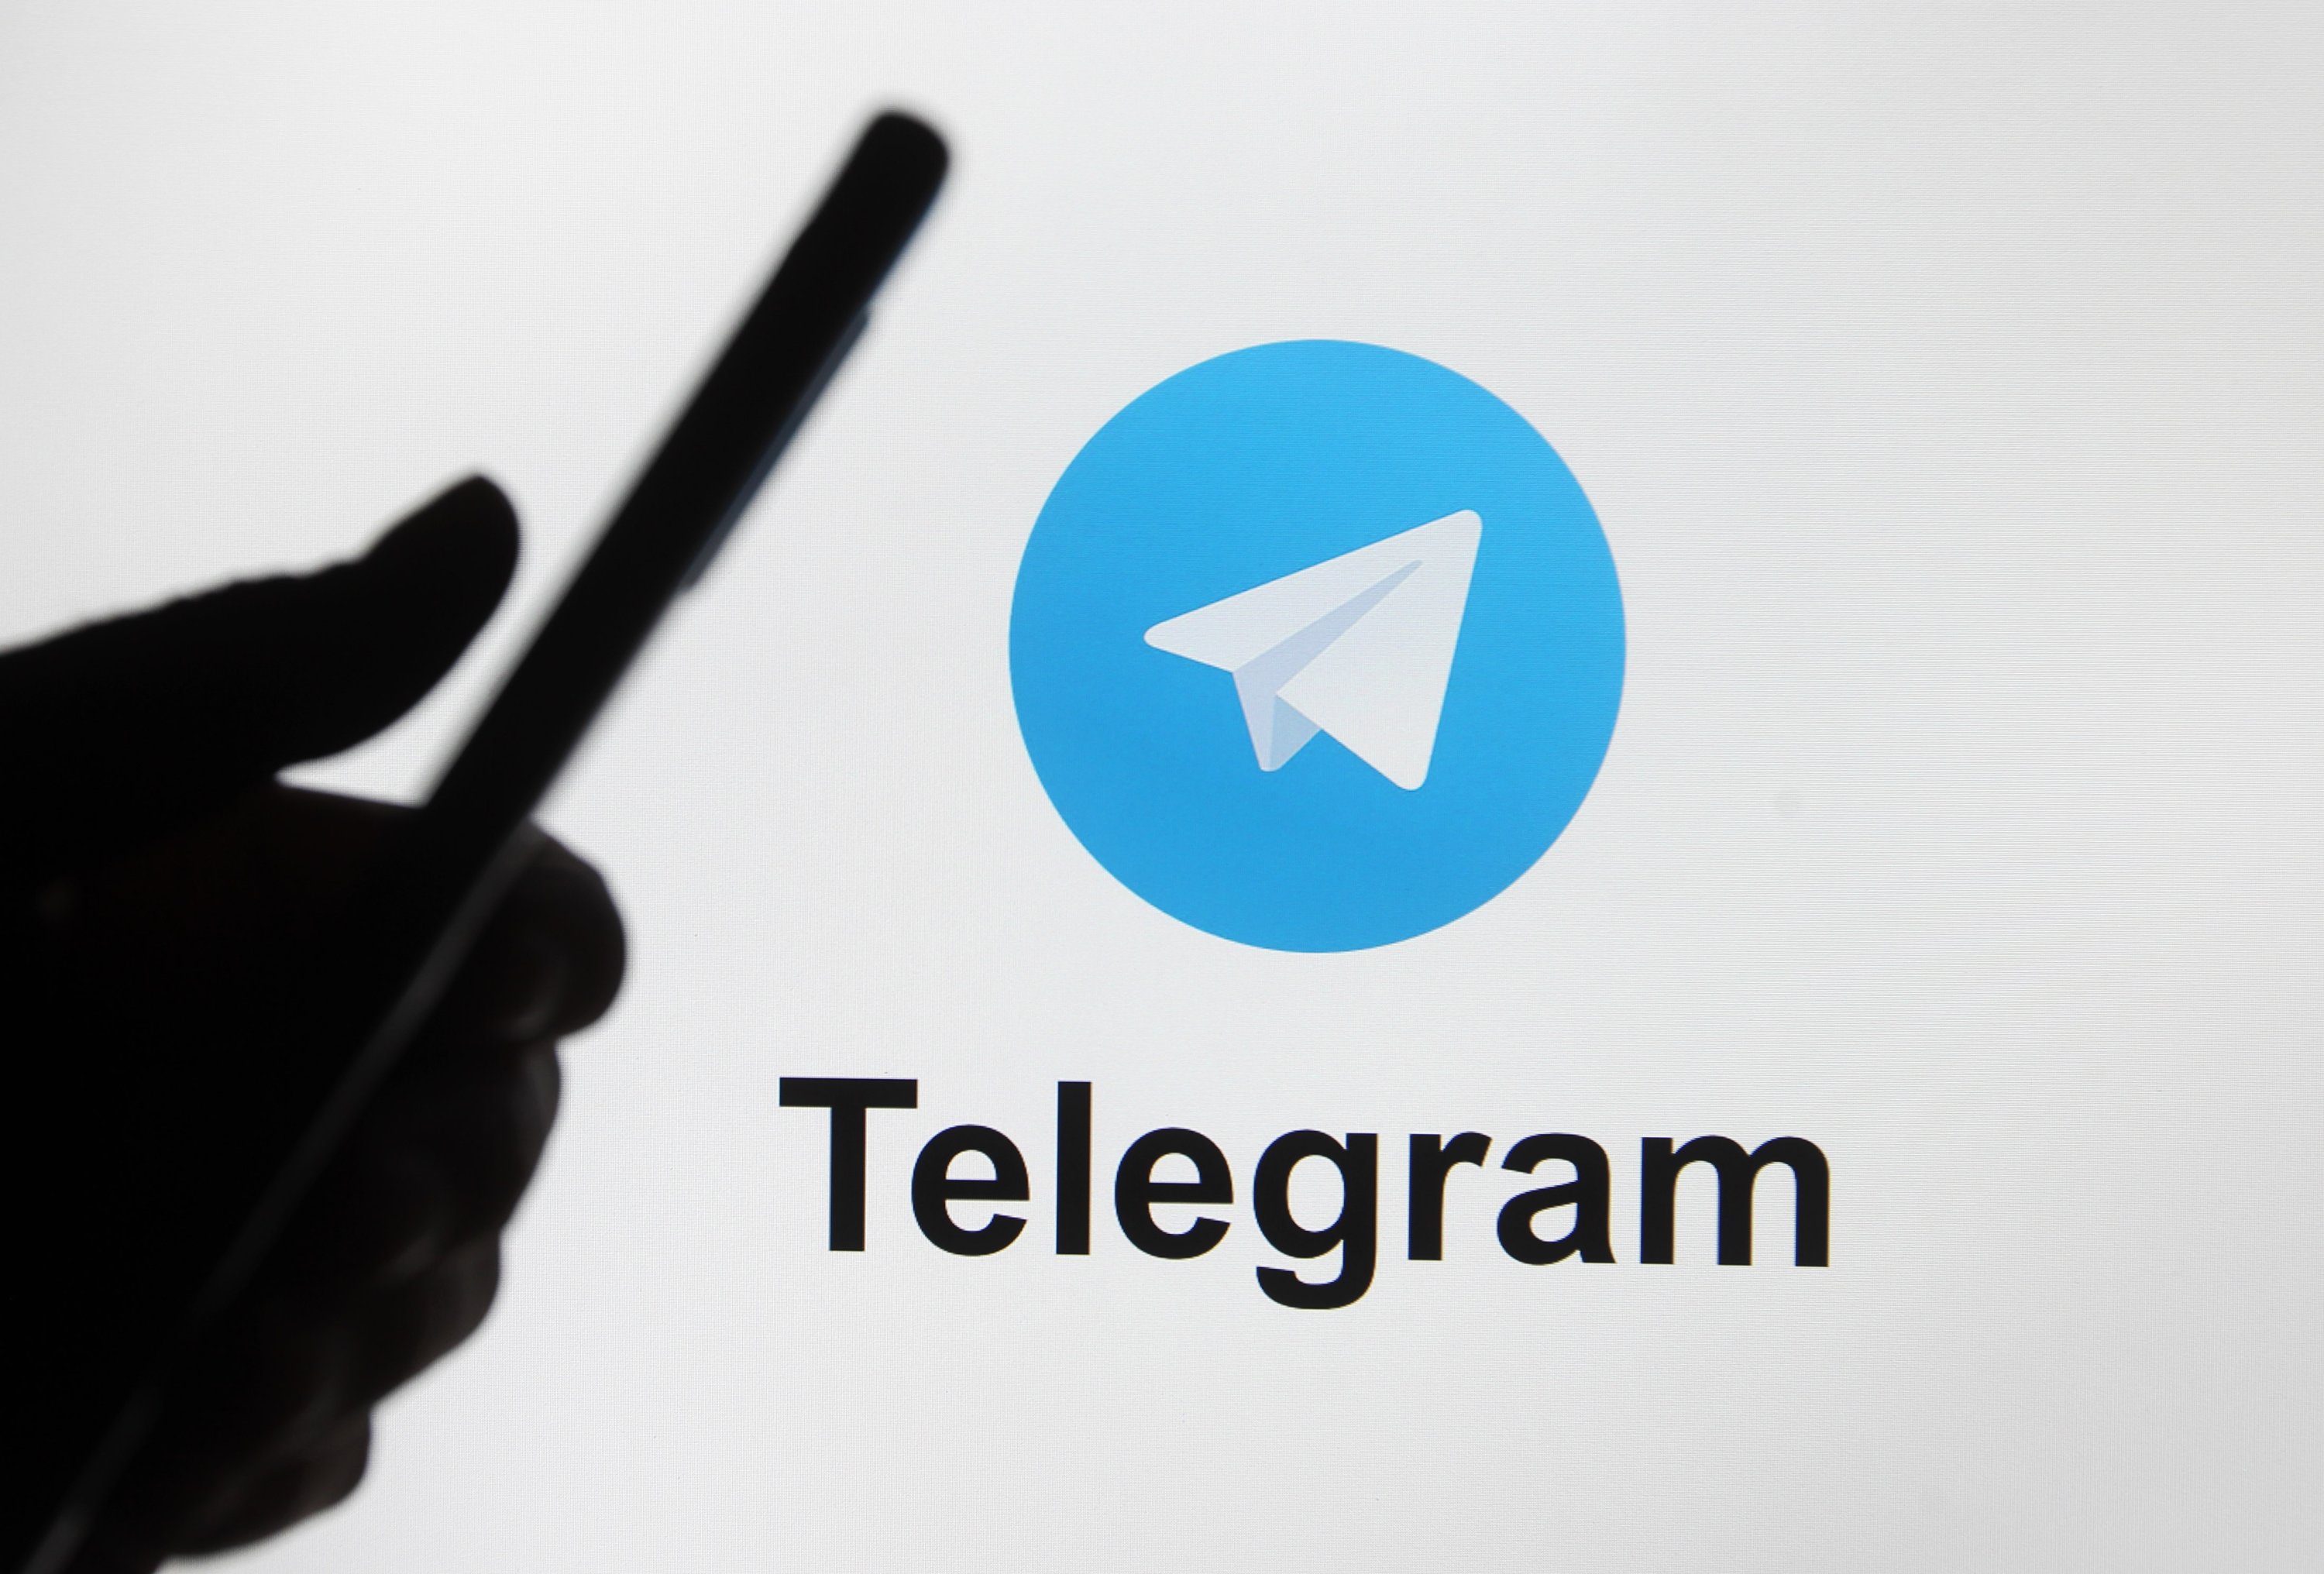 Telegram messaging app raises $1 billion through bond sales | Daily Sabah